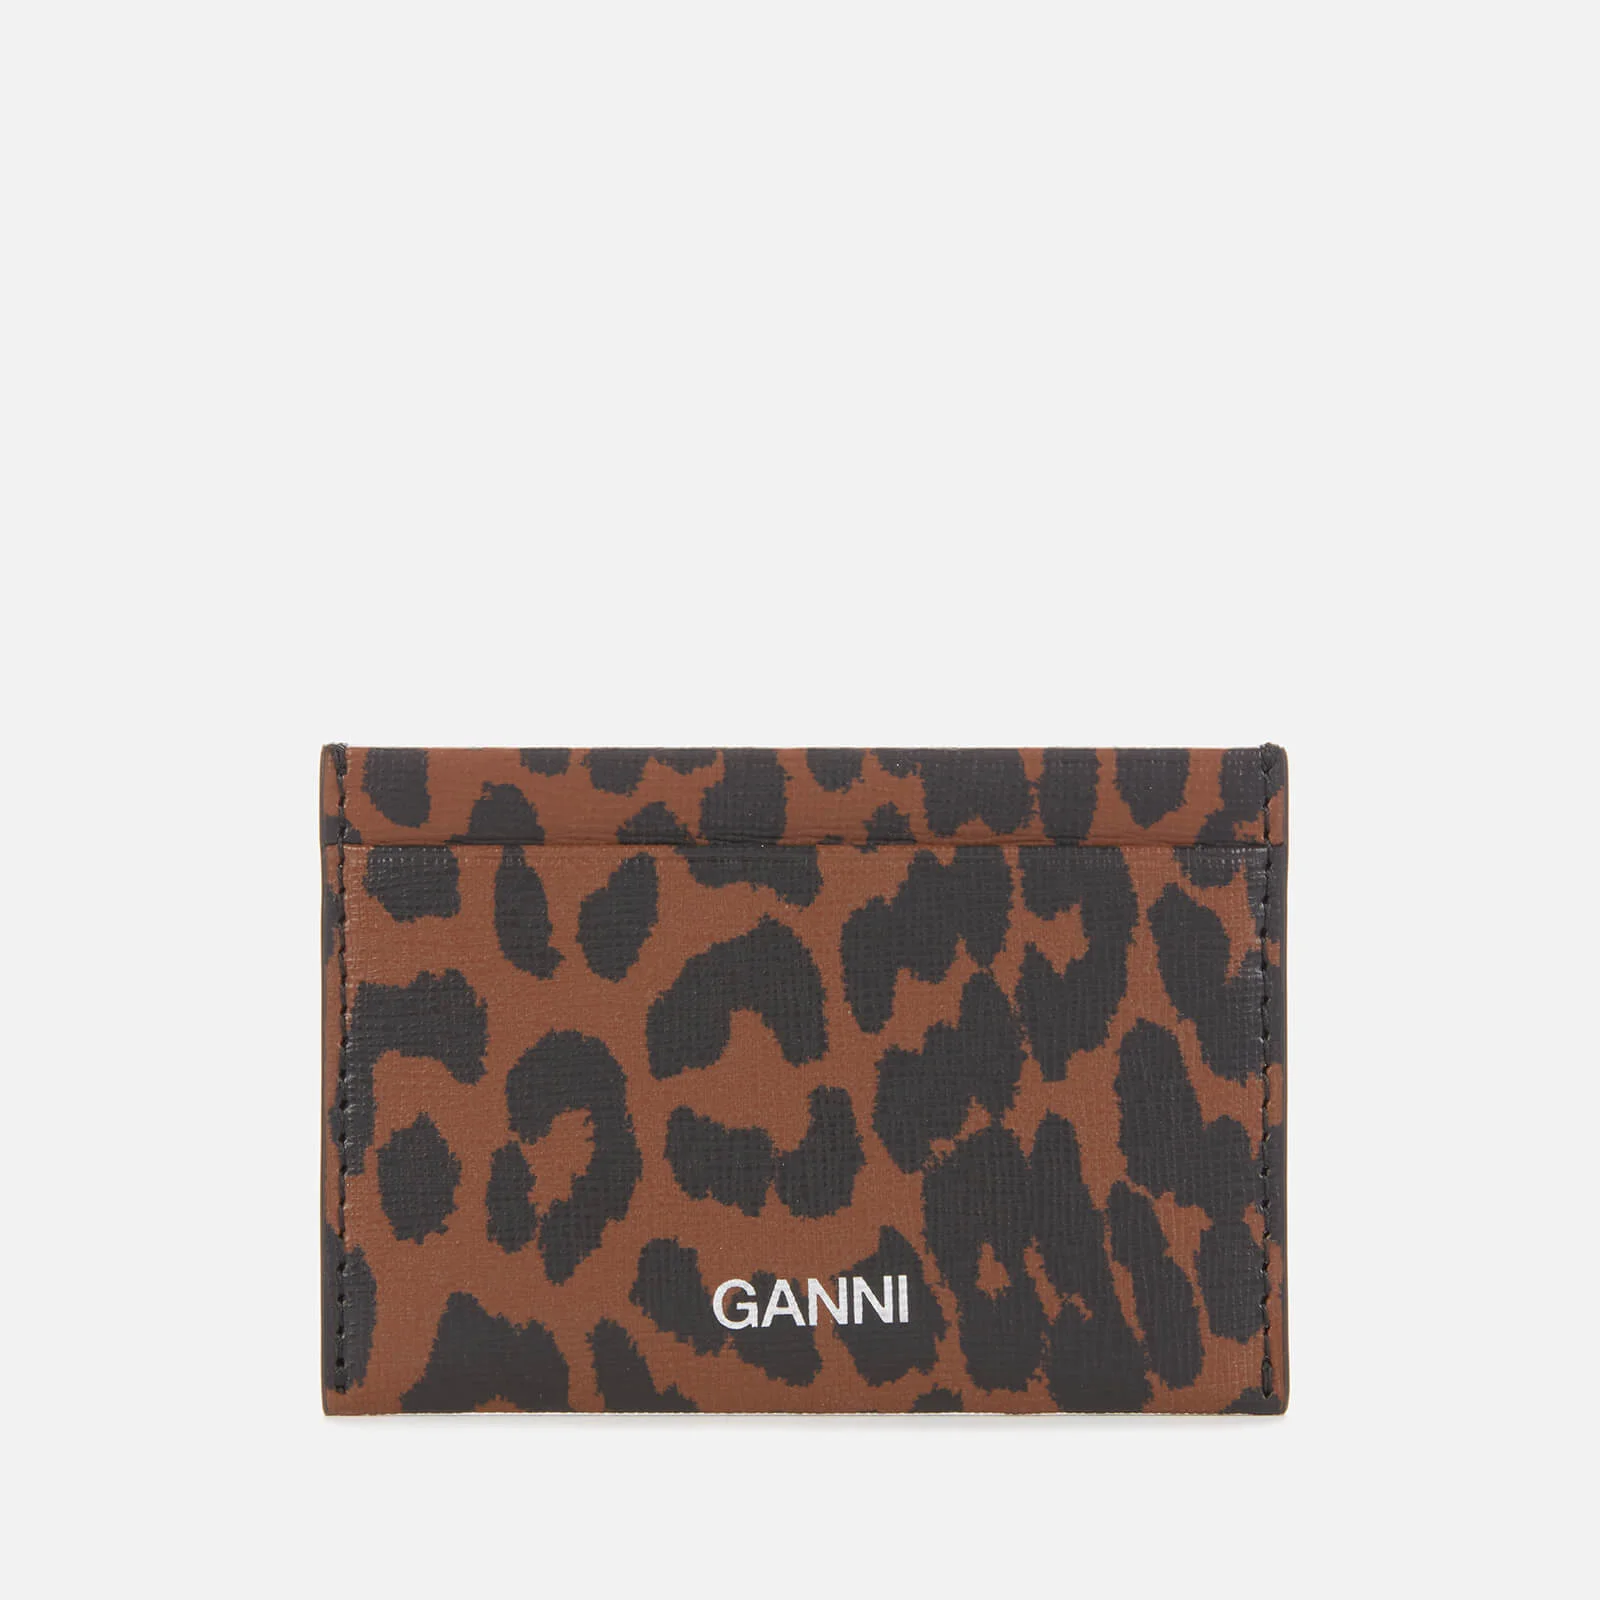 Ganni Women's Leopard Print Card Holder - Toffee Image 1